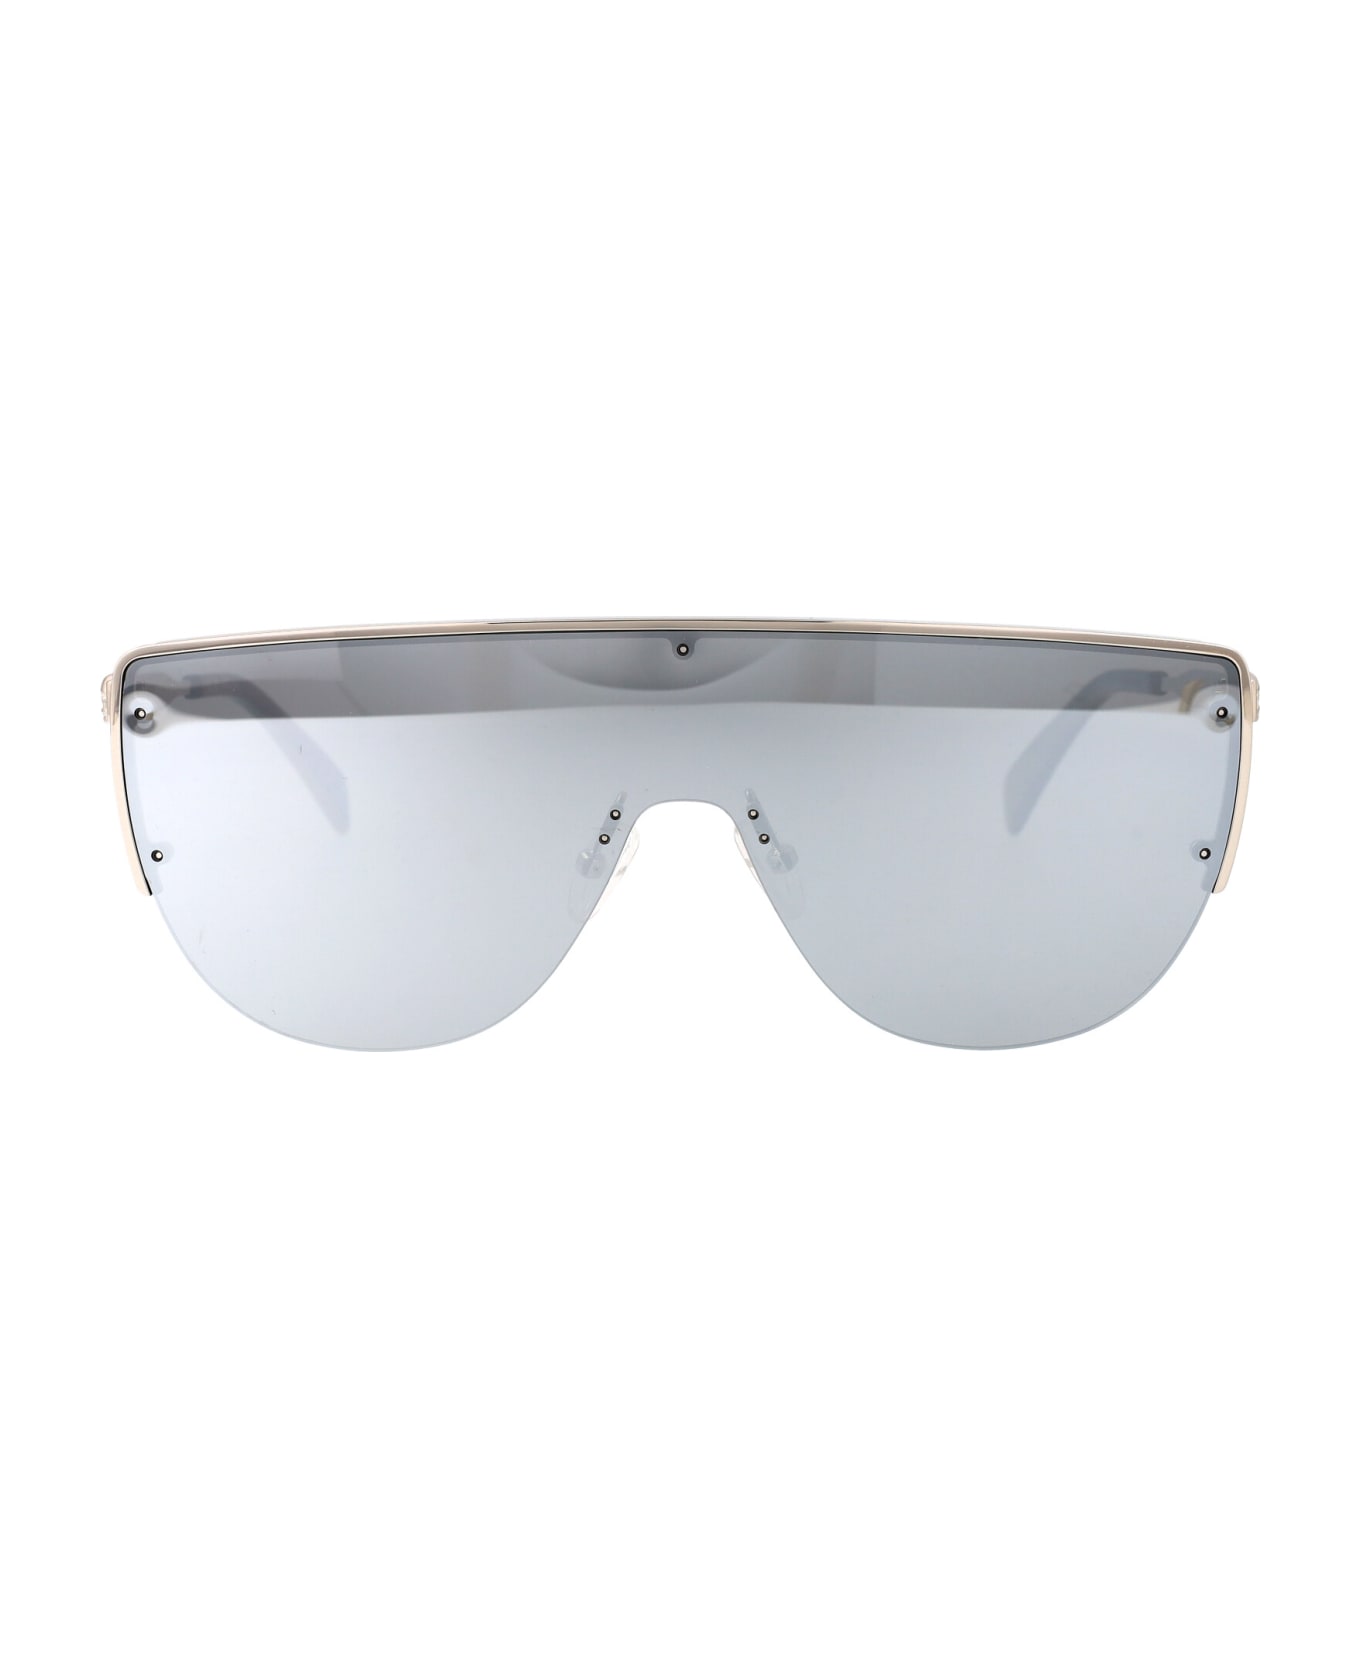 Alexander McQueen Eyewear Am0457s Sunglasses - 004 SILVER SILVER SILVER